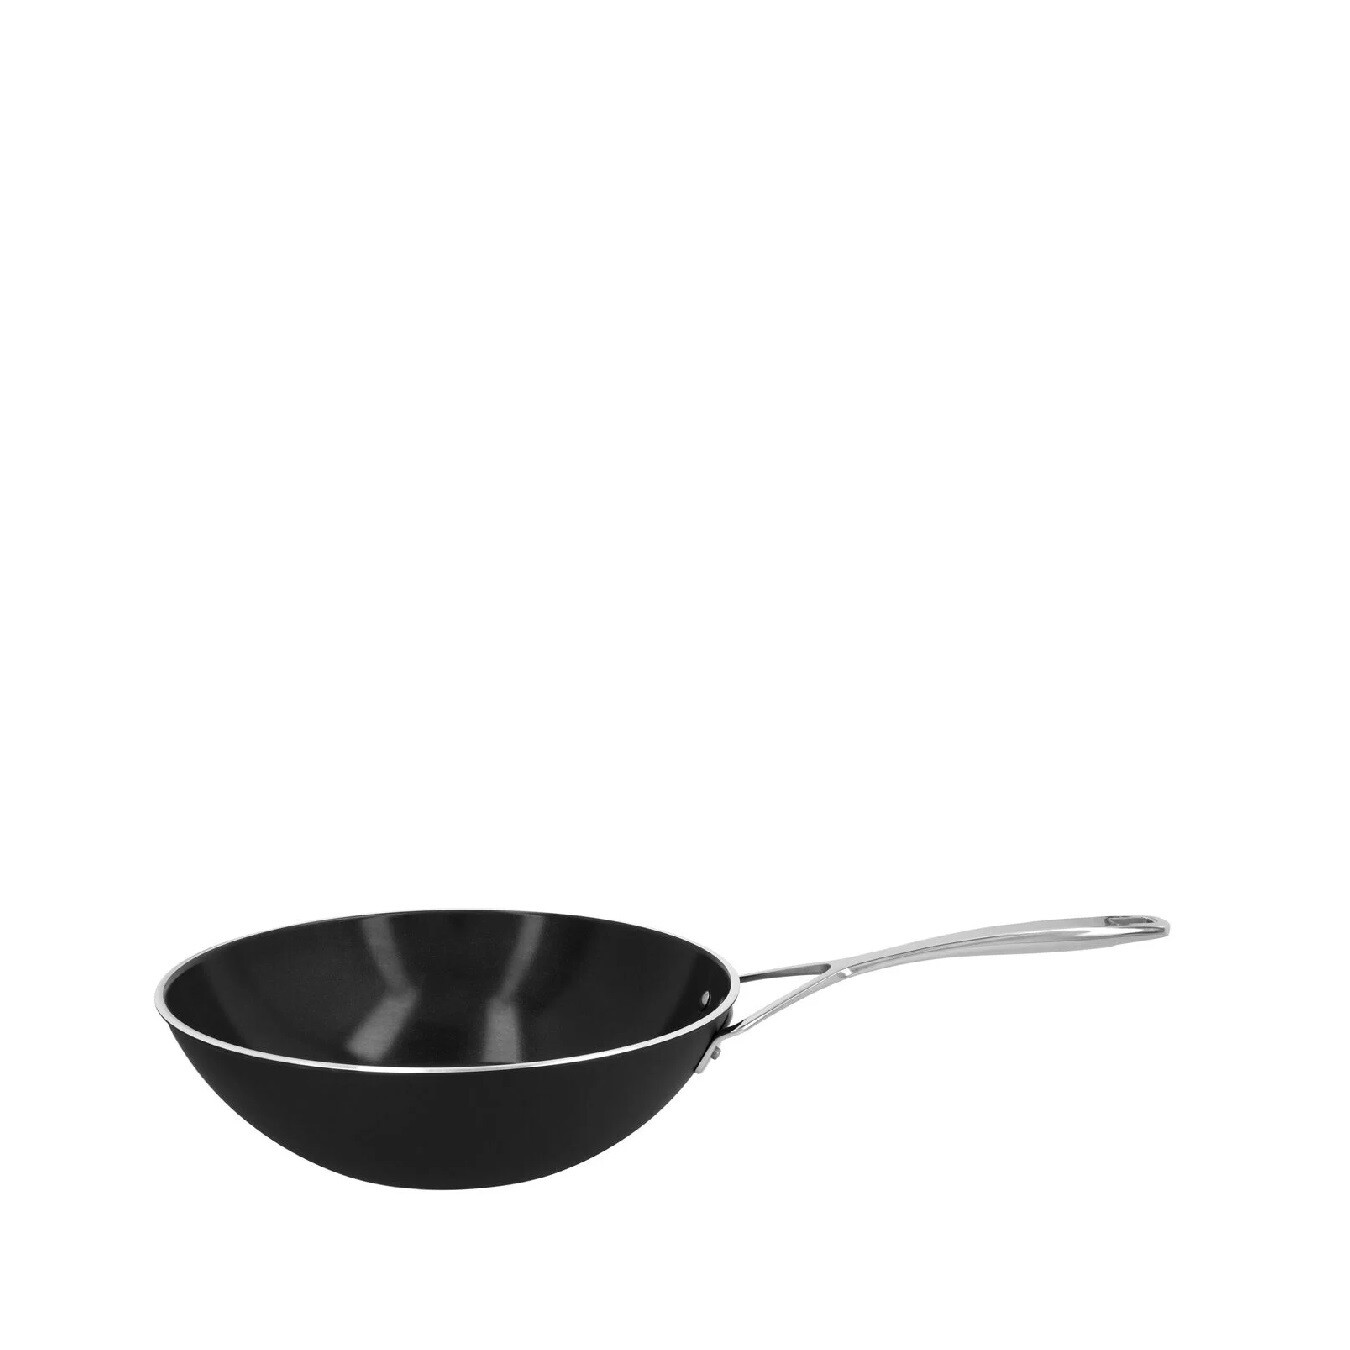 DEMEYERE 'alu pro 5 ceraforce' keramische antikleef wok 30cm PROMO 109,00 -20%